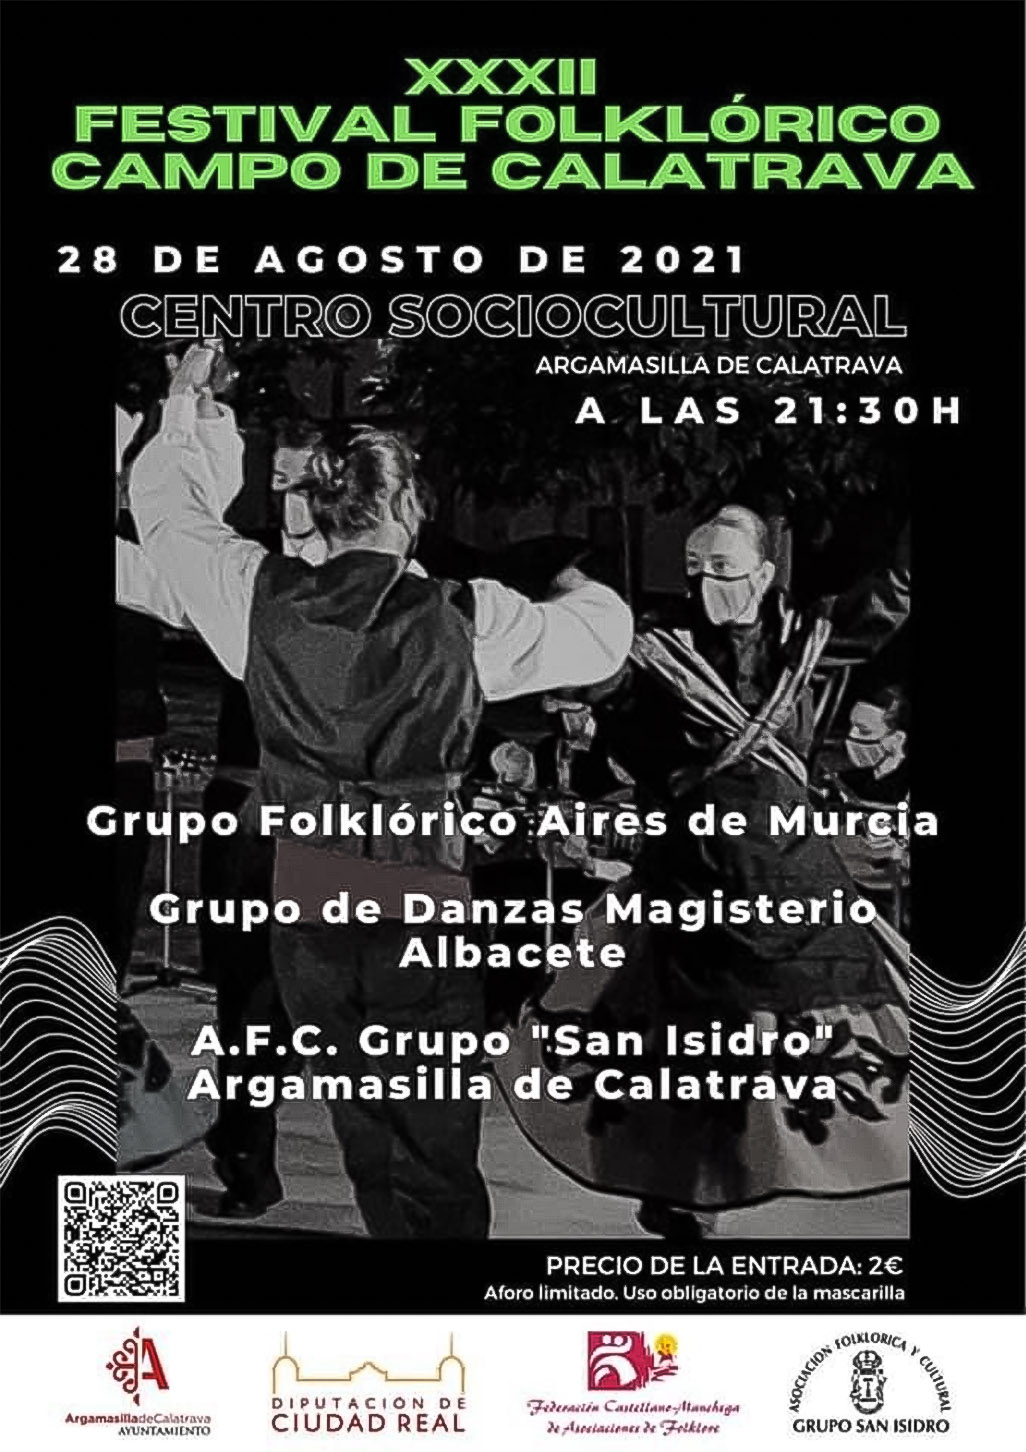 Festival Folklórico Argamasilla de Calatrava